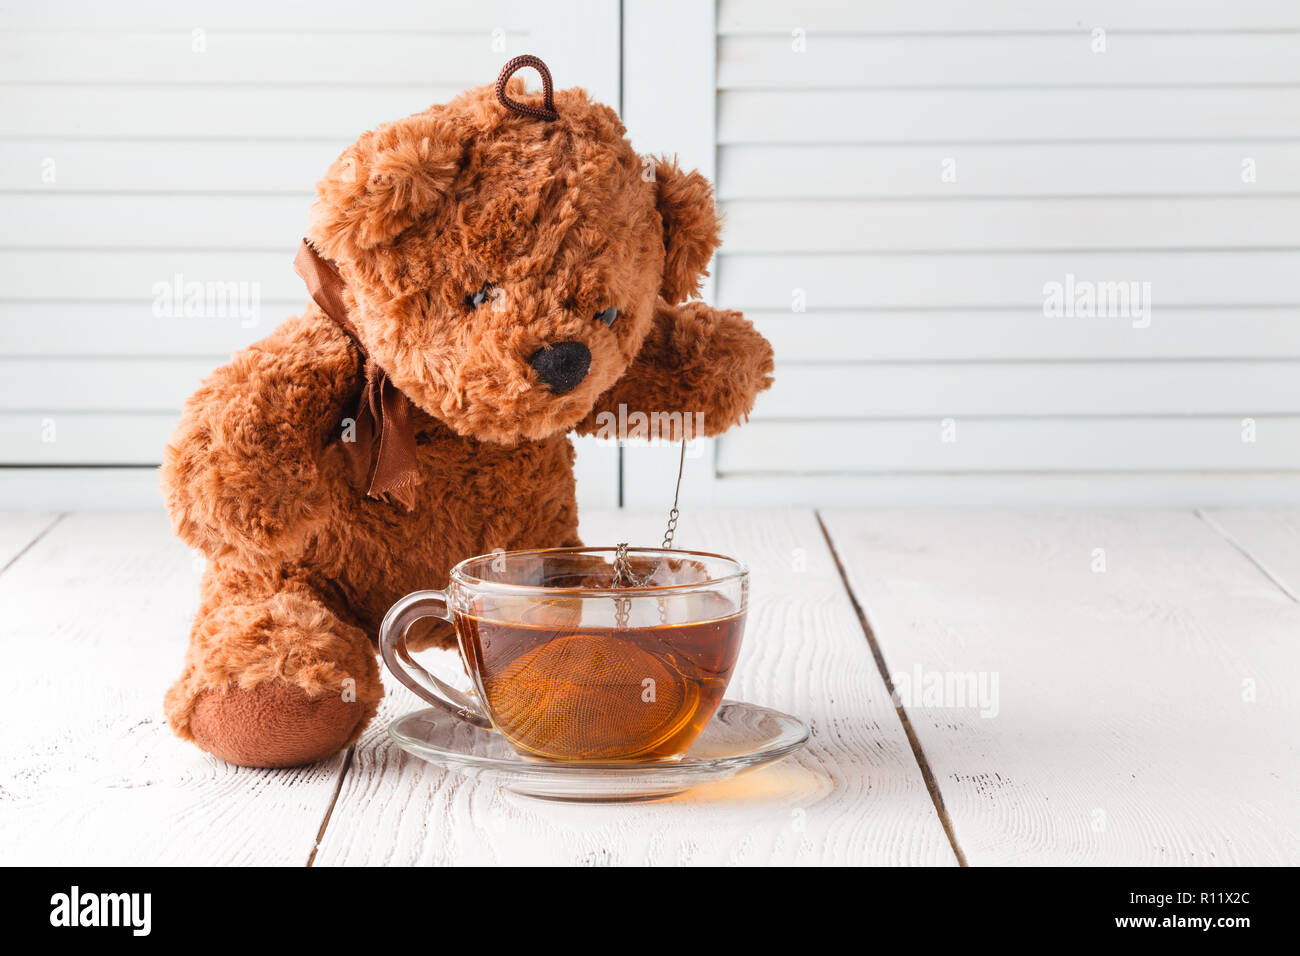 Good morning with teddy bear Stock Photo - Alamy